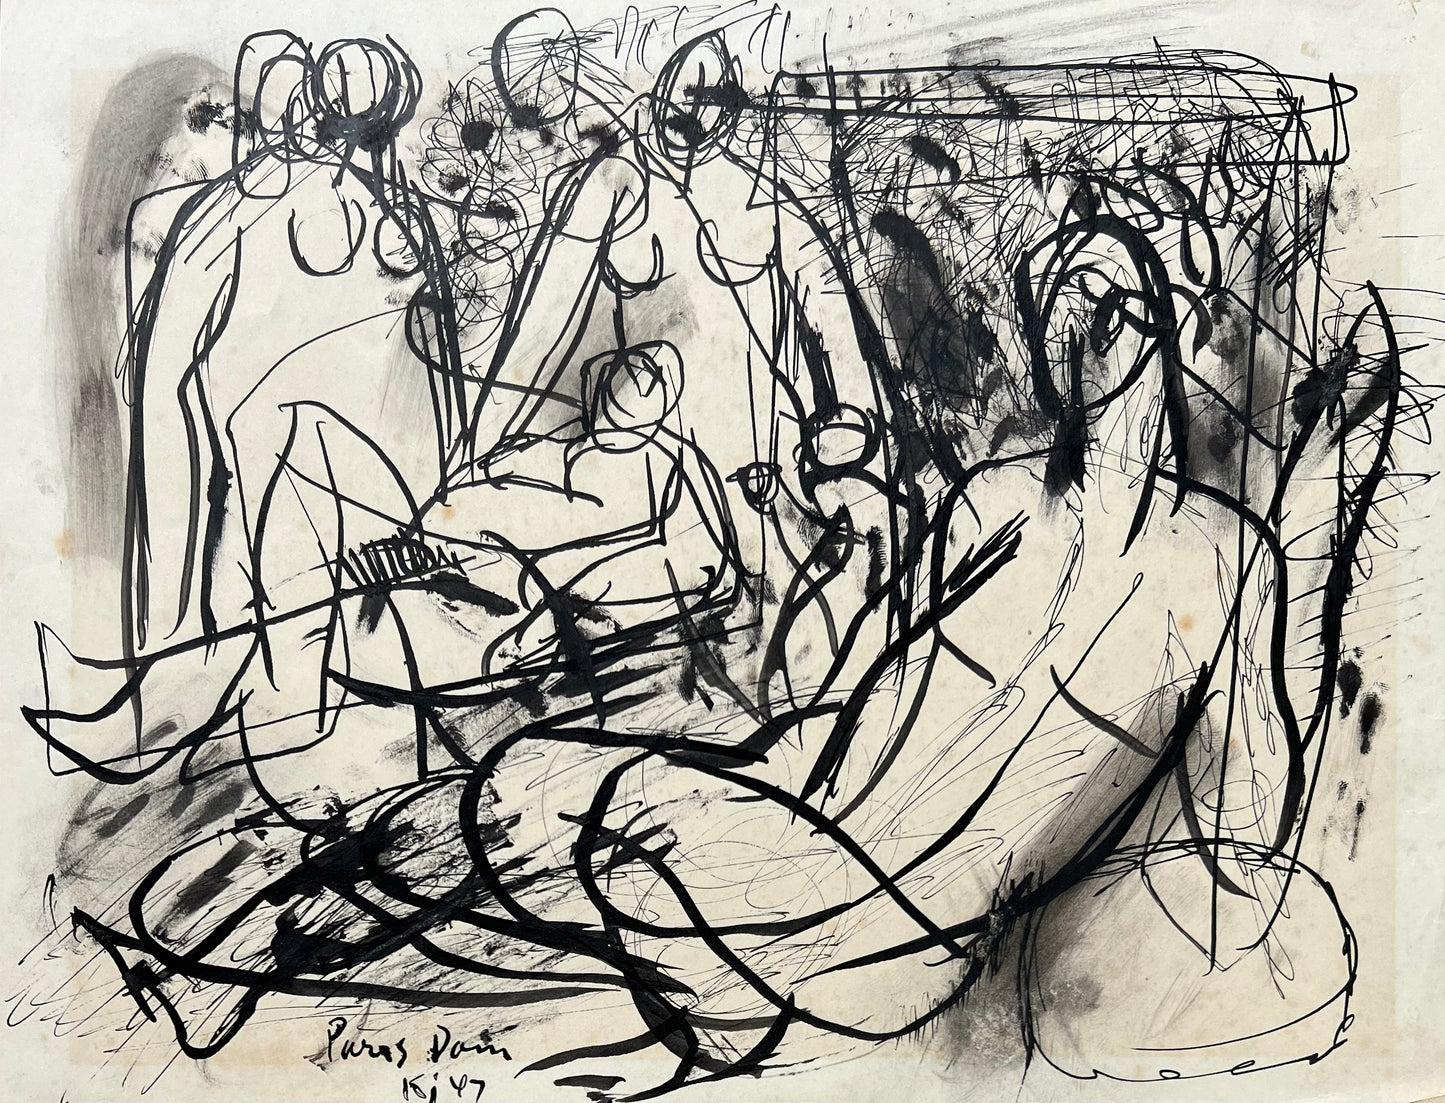 Knud Jans. "The Judgment of Paris", 1947